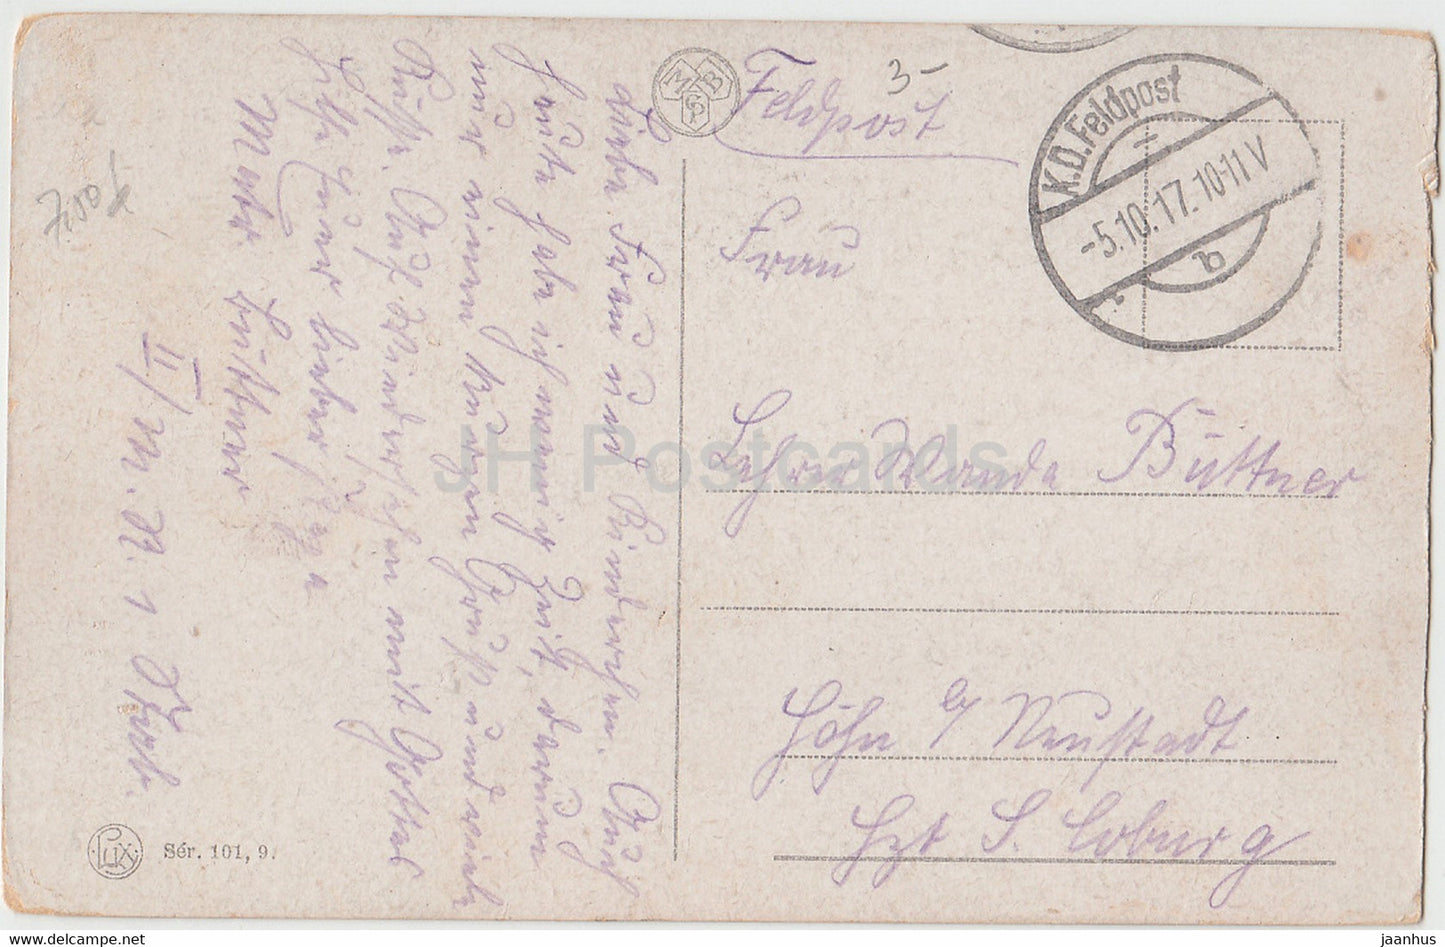 Brügge - Brugge - Chapelle de Saint Sang - Feldpost - alte Postkarte - 1917 - Belgien - gebraucht